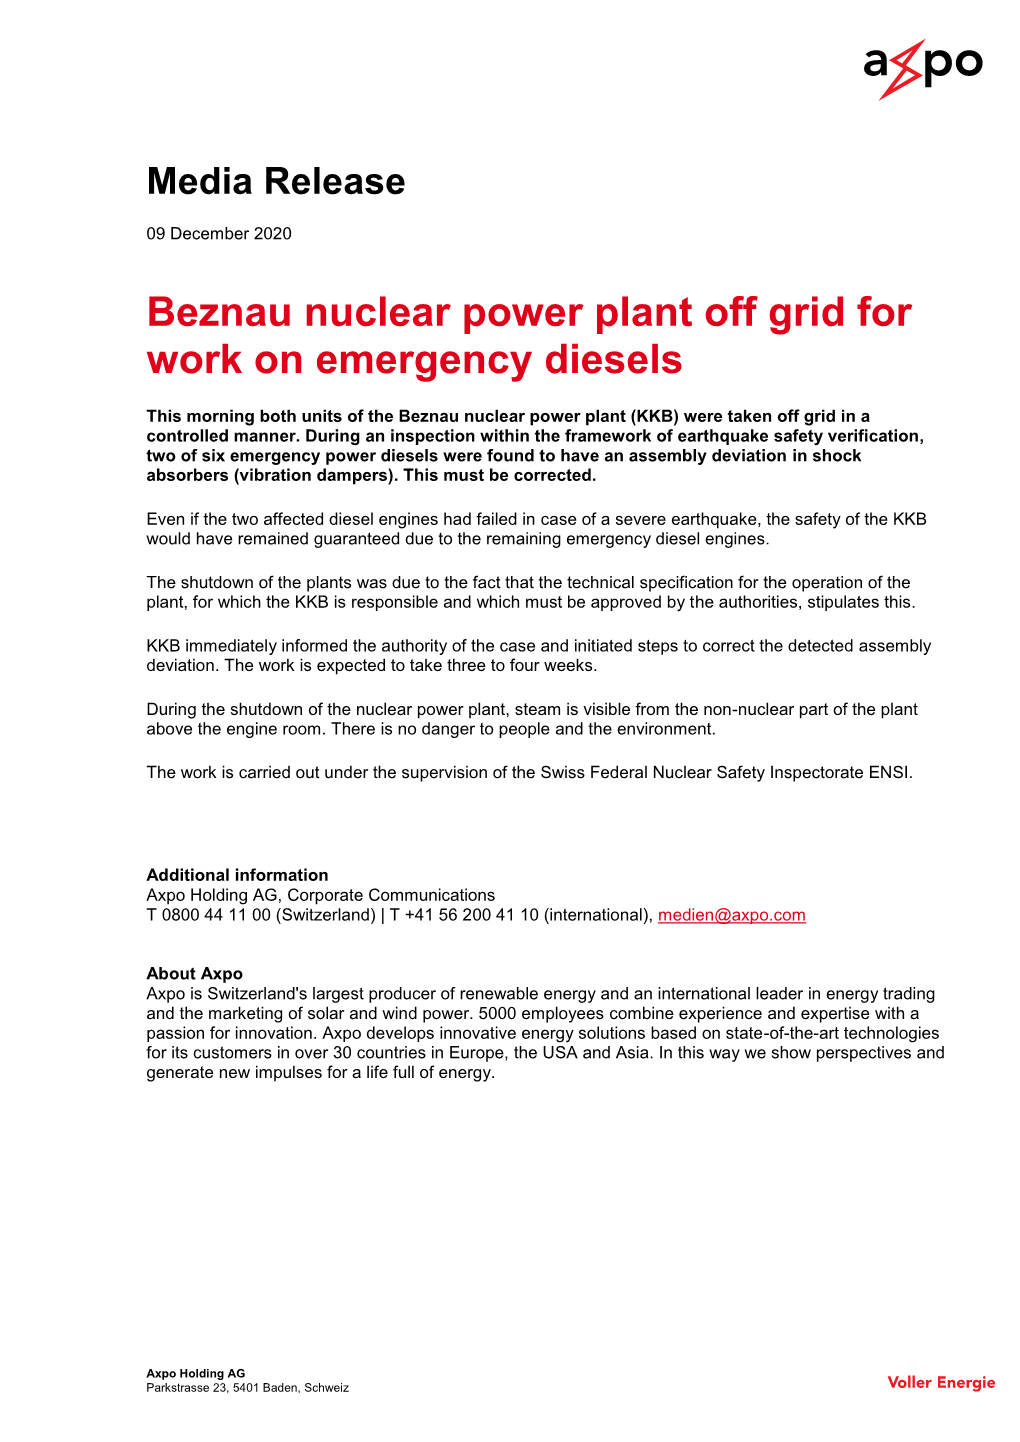 Beznau Nuclear Power Plant Off Grid for Work on Emergency Diesels